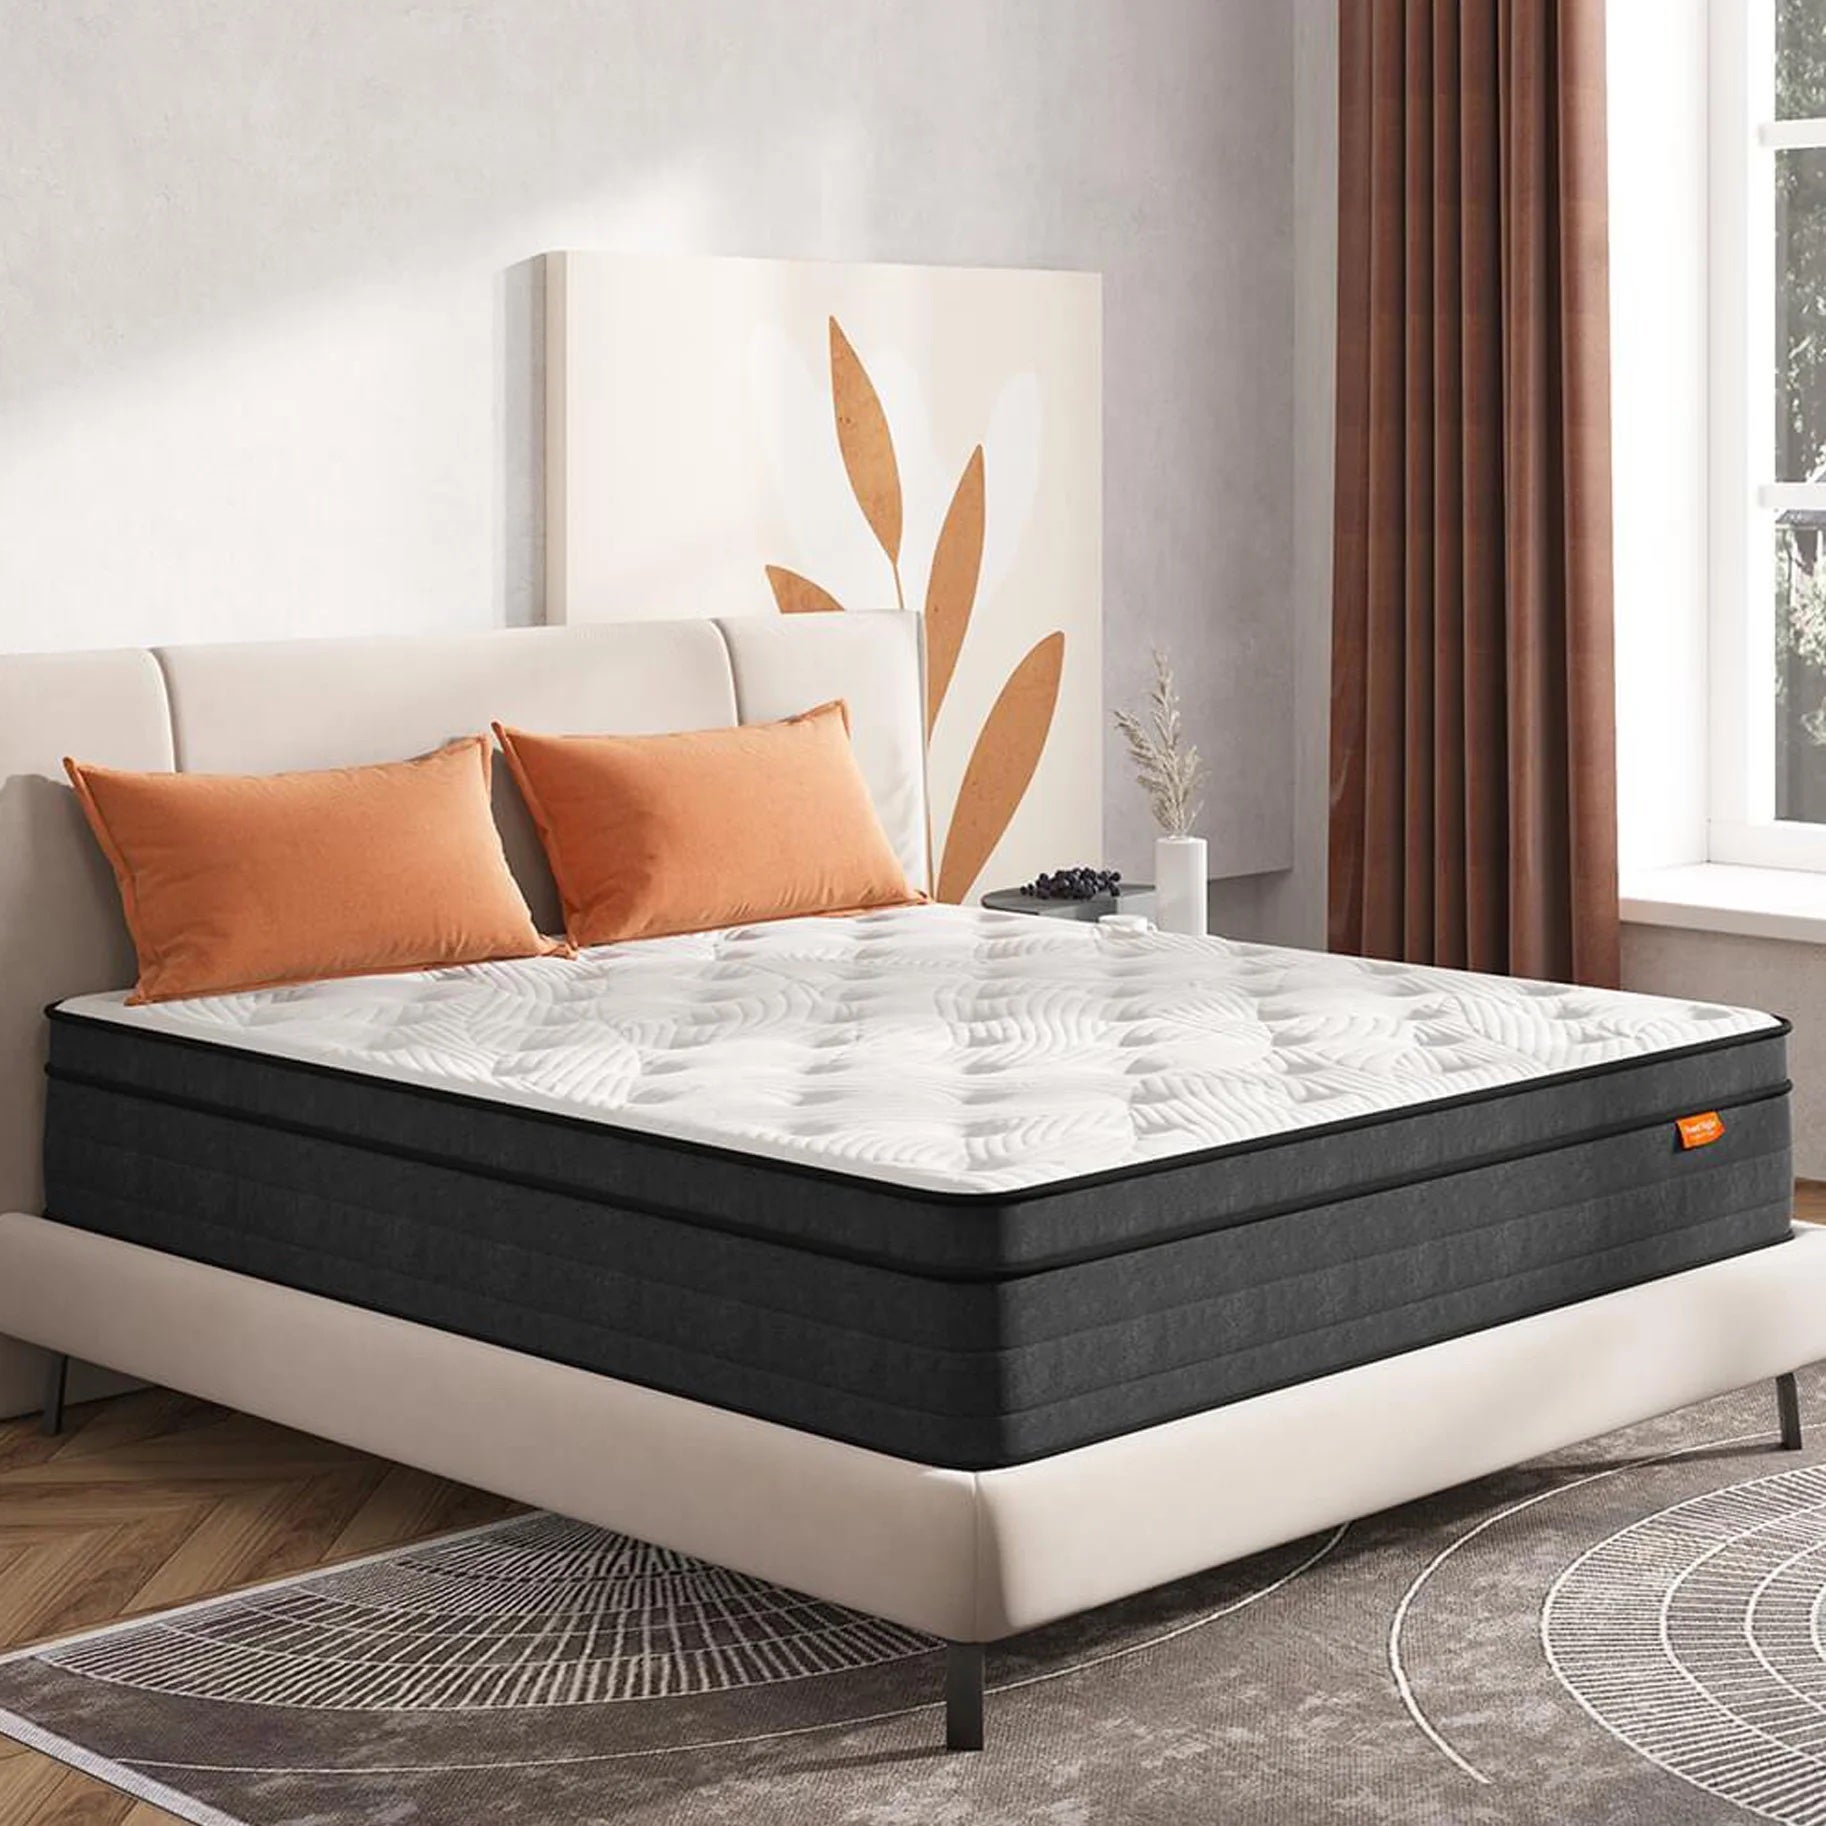 Hybrid mattress with orange pillows